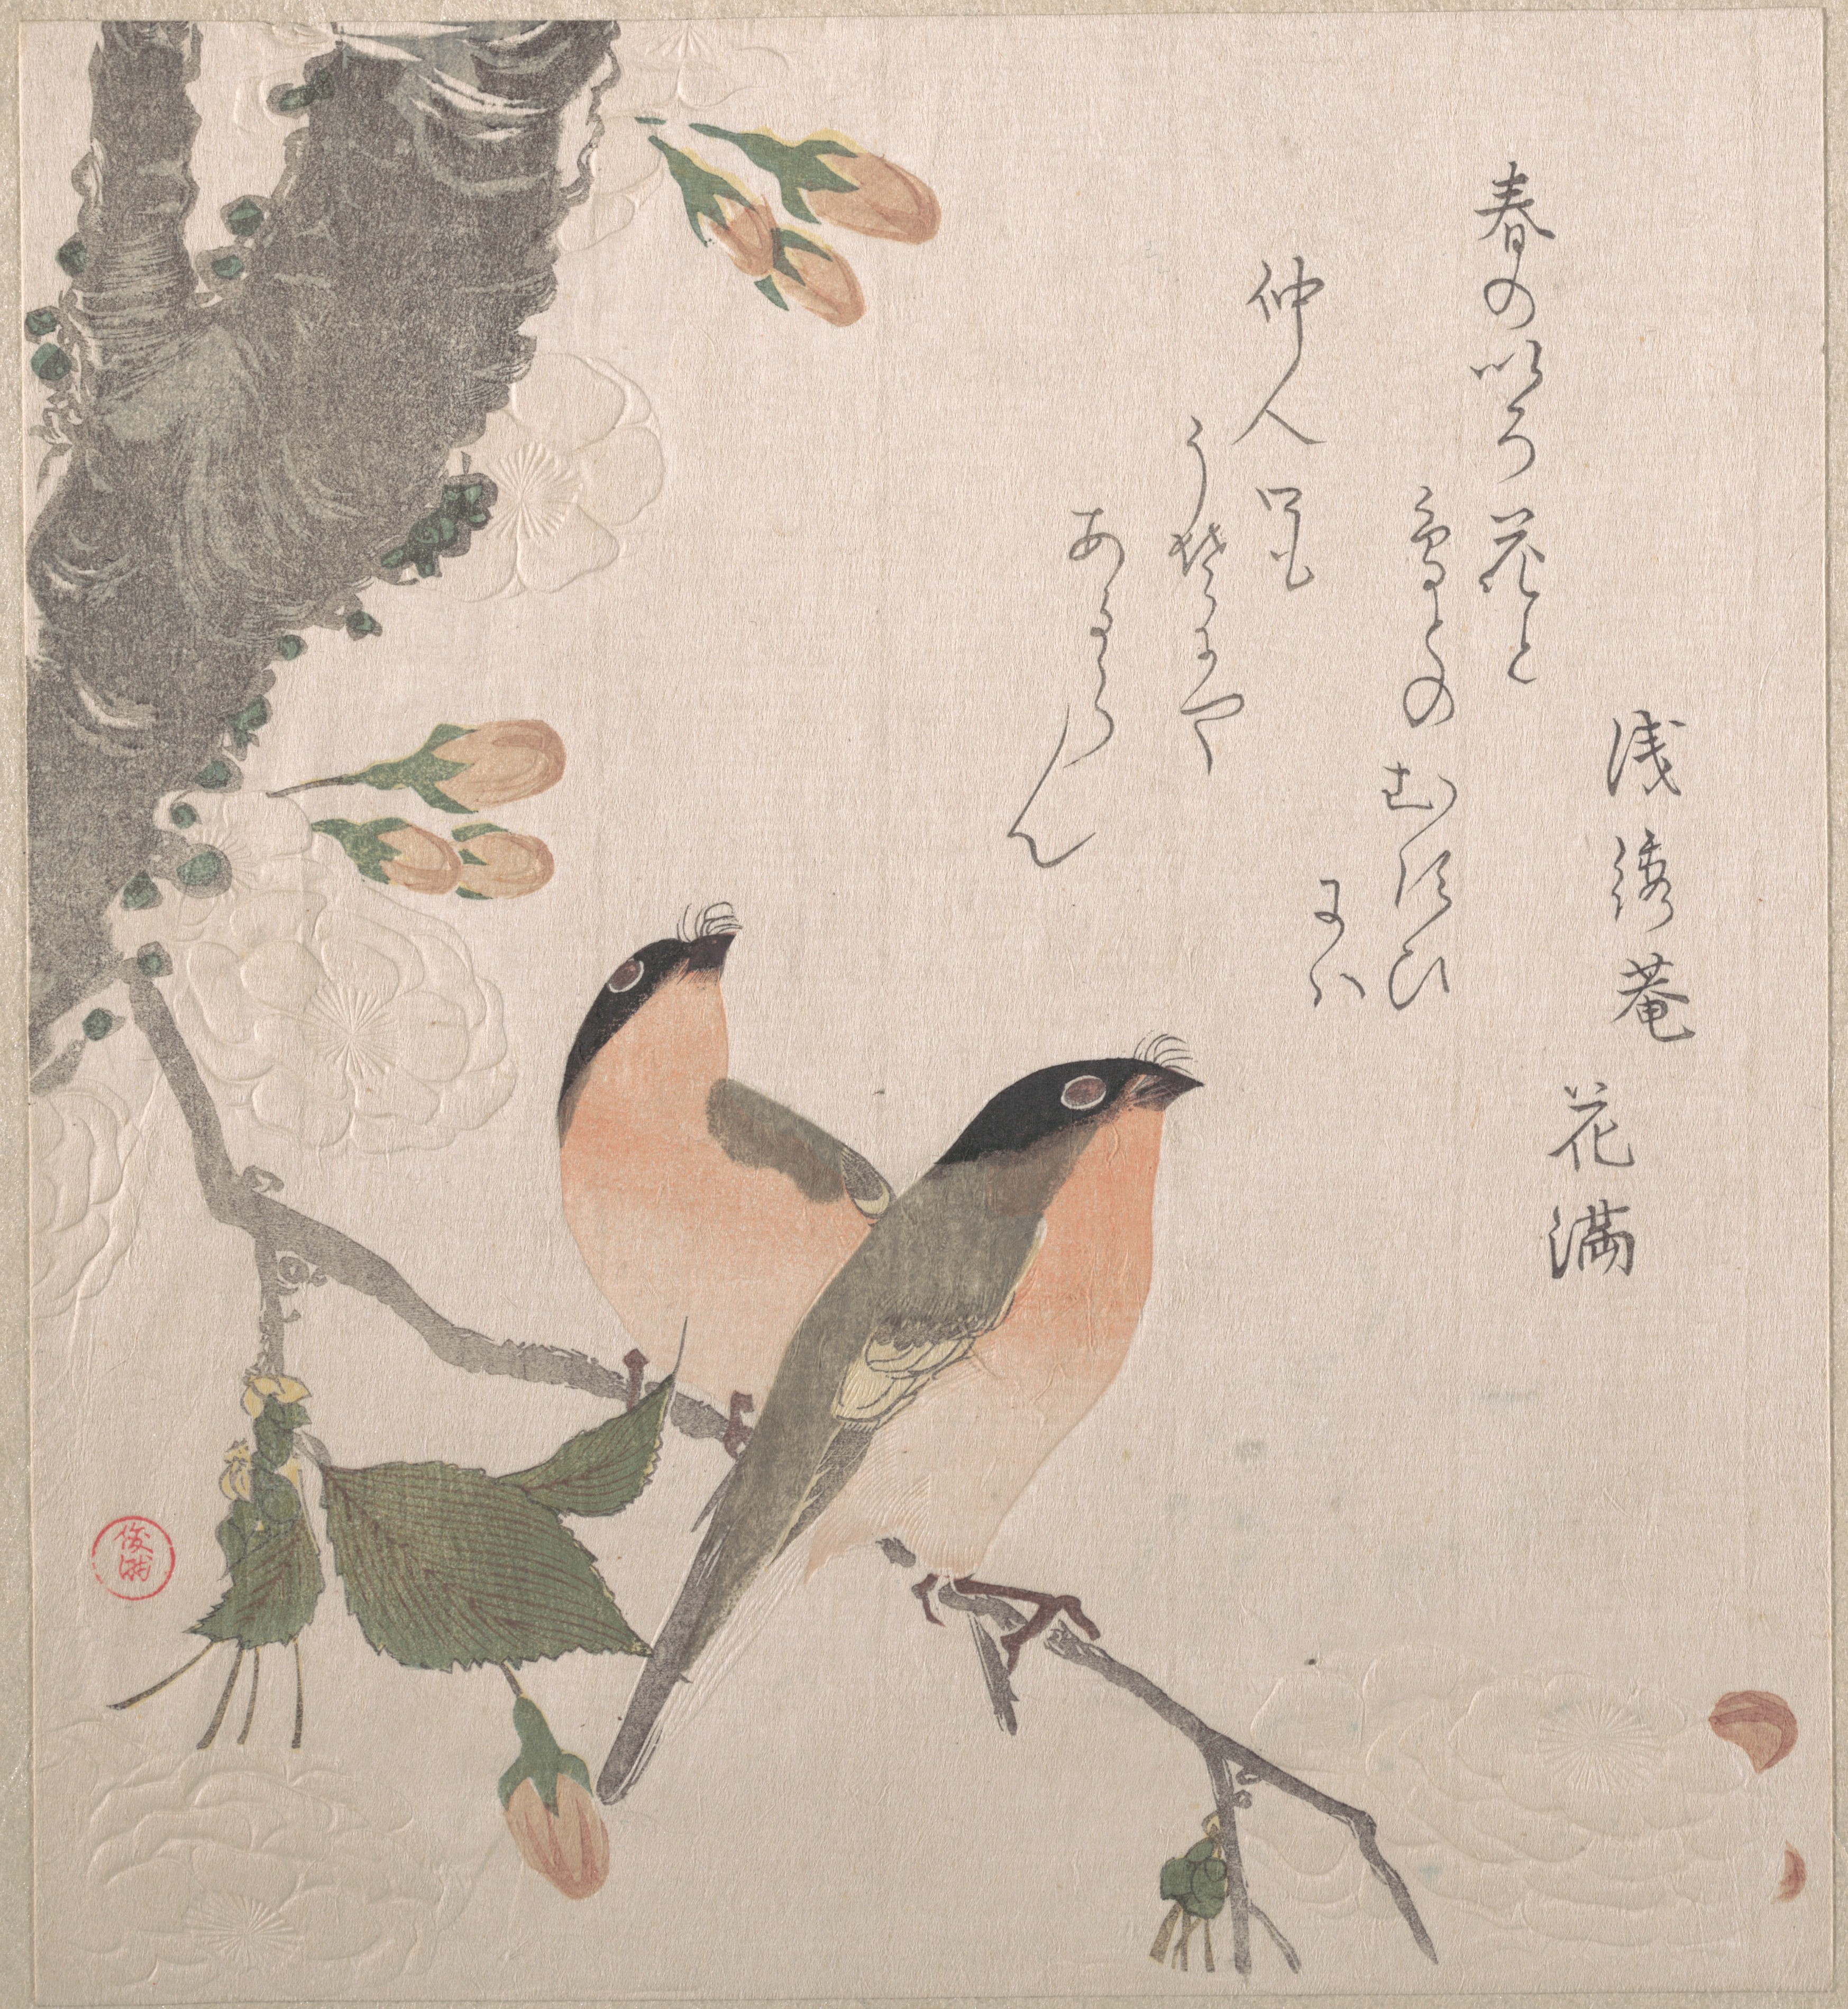 Surimono Print - haiku - ukiyo e - Paul Conneally - Little Onion - art poetry